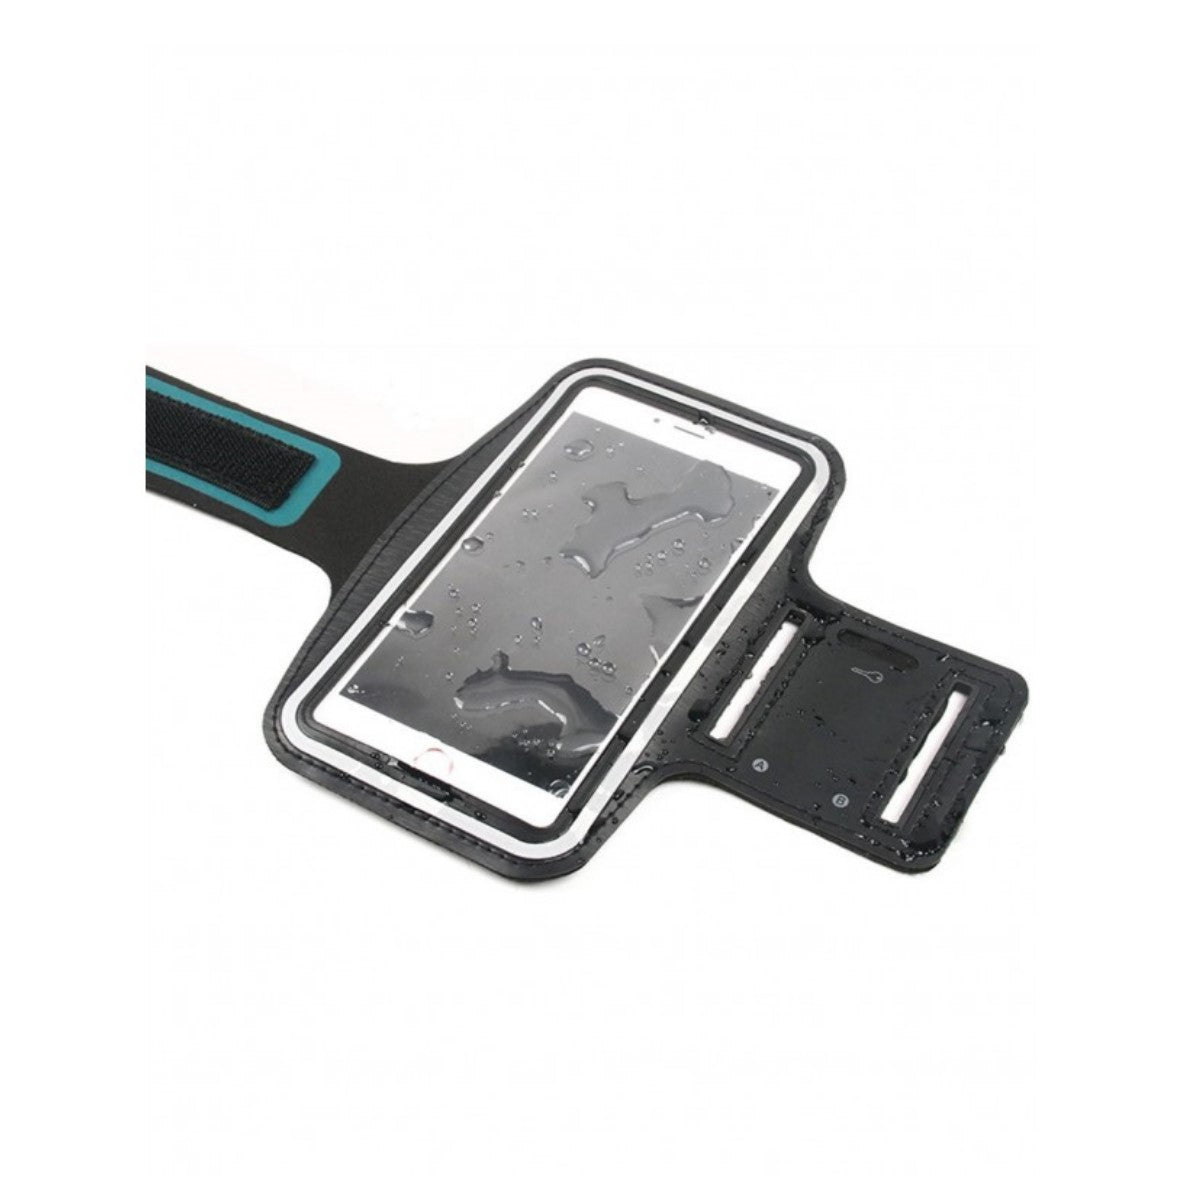 Armband für Samsung Galaxy A41 Sportarmband Handy Tasche Fitness Jogging Handyhülle